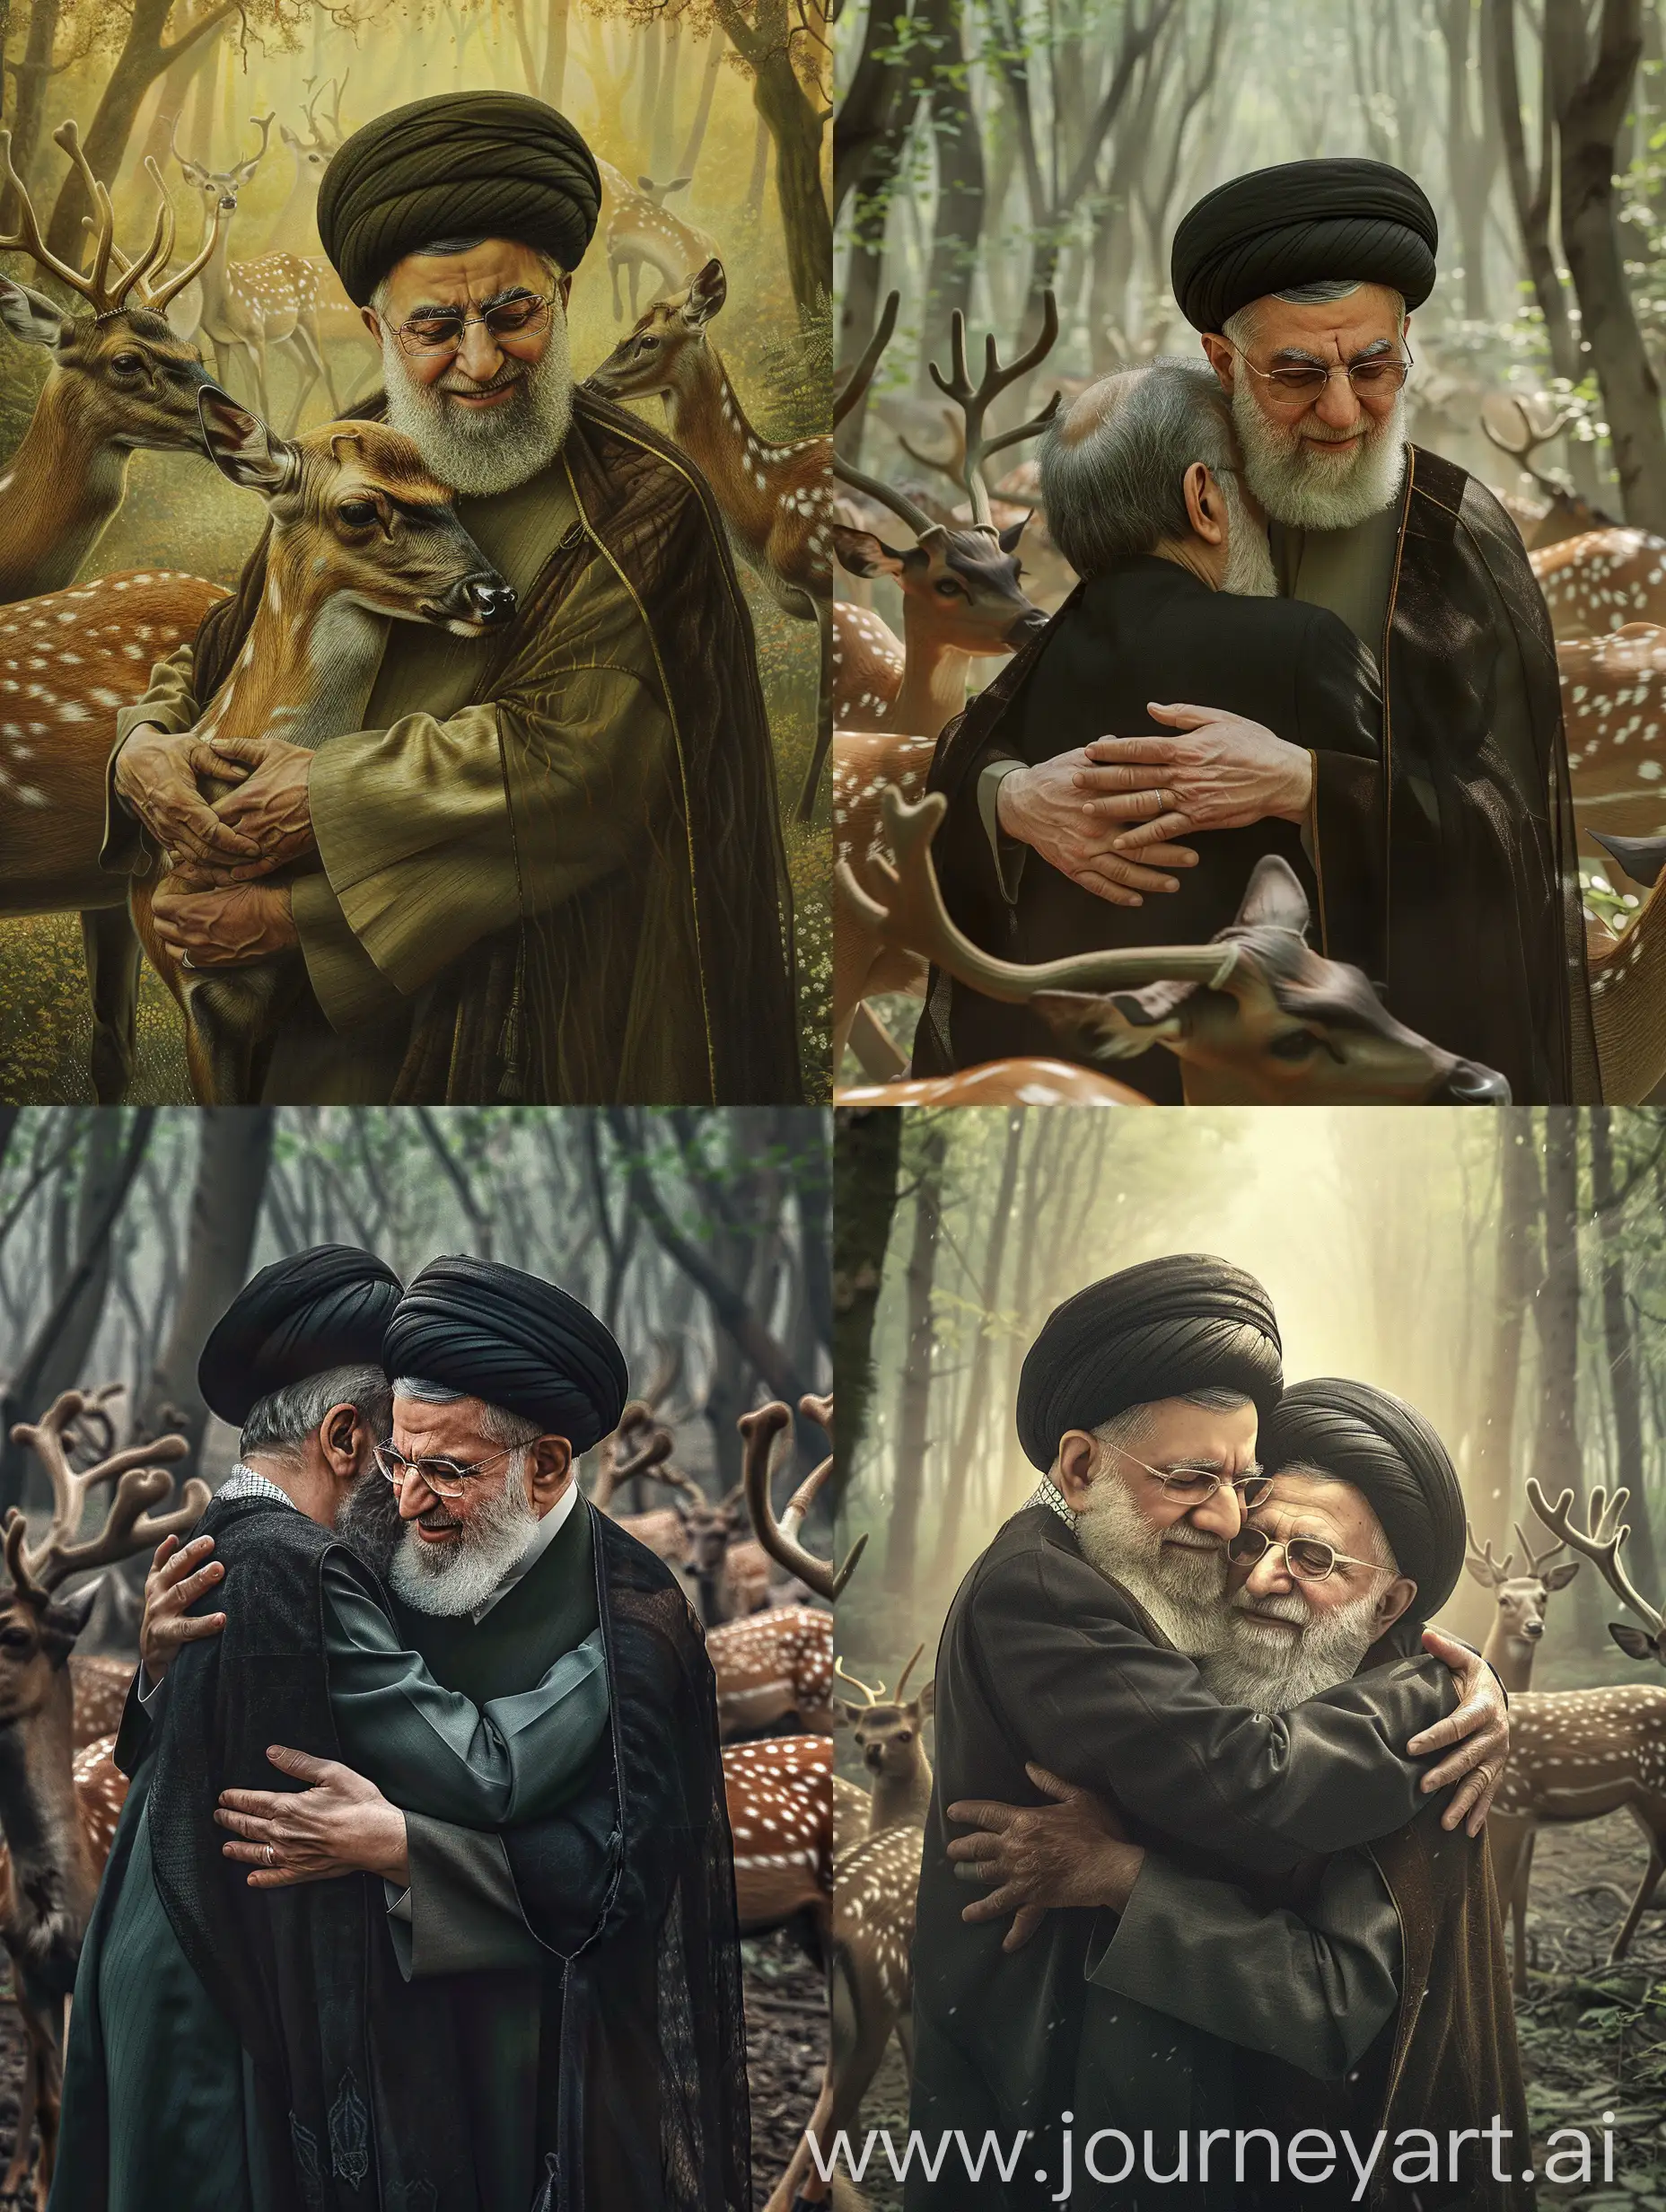 President-Ebrahim-Raisi-Embraced-by-Radiant-Imam-Mahdi-in-Serene-Forest-with-Deer